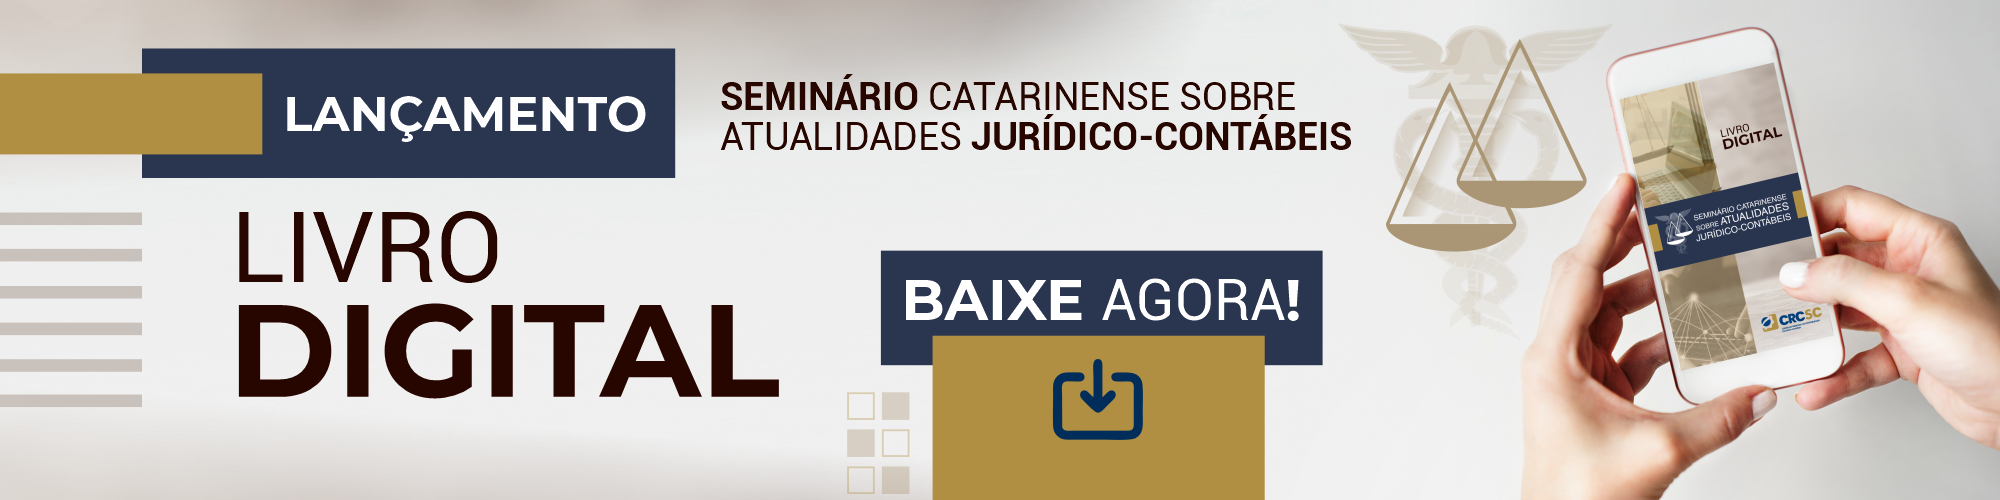  Livro Digital: Seminário Catarinense Sobre Atualidades Jurídico-Contábeis